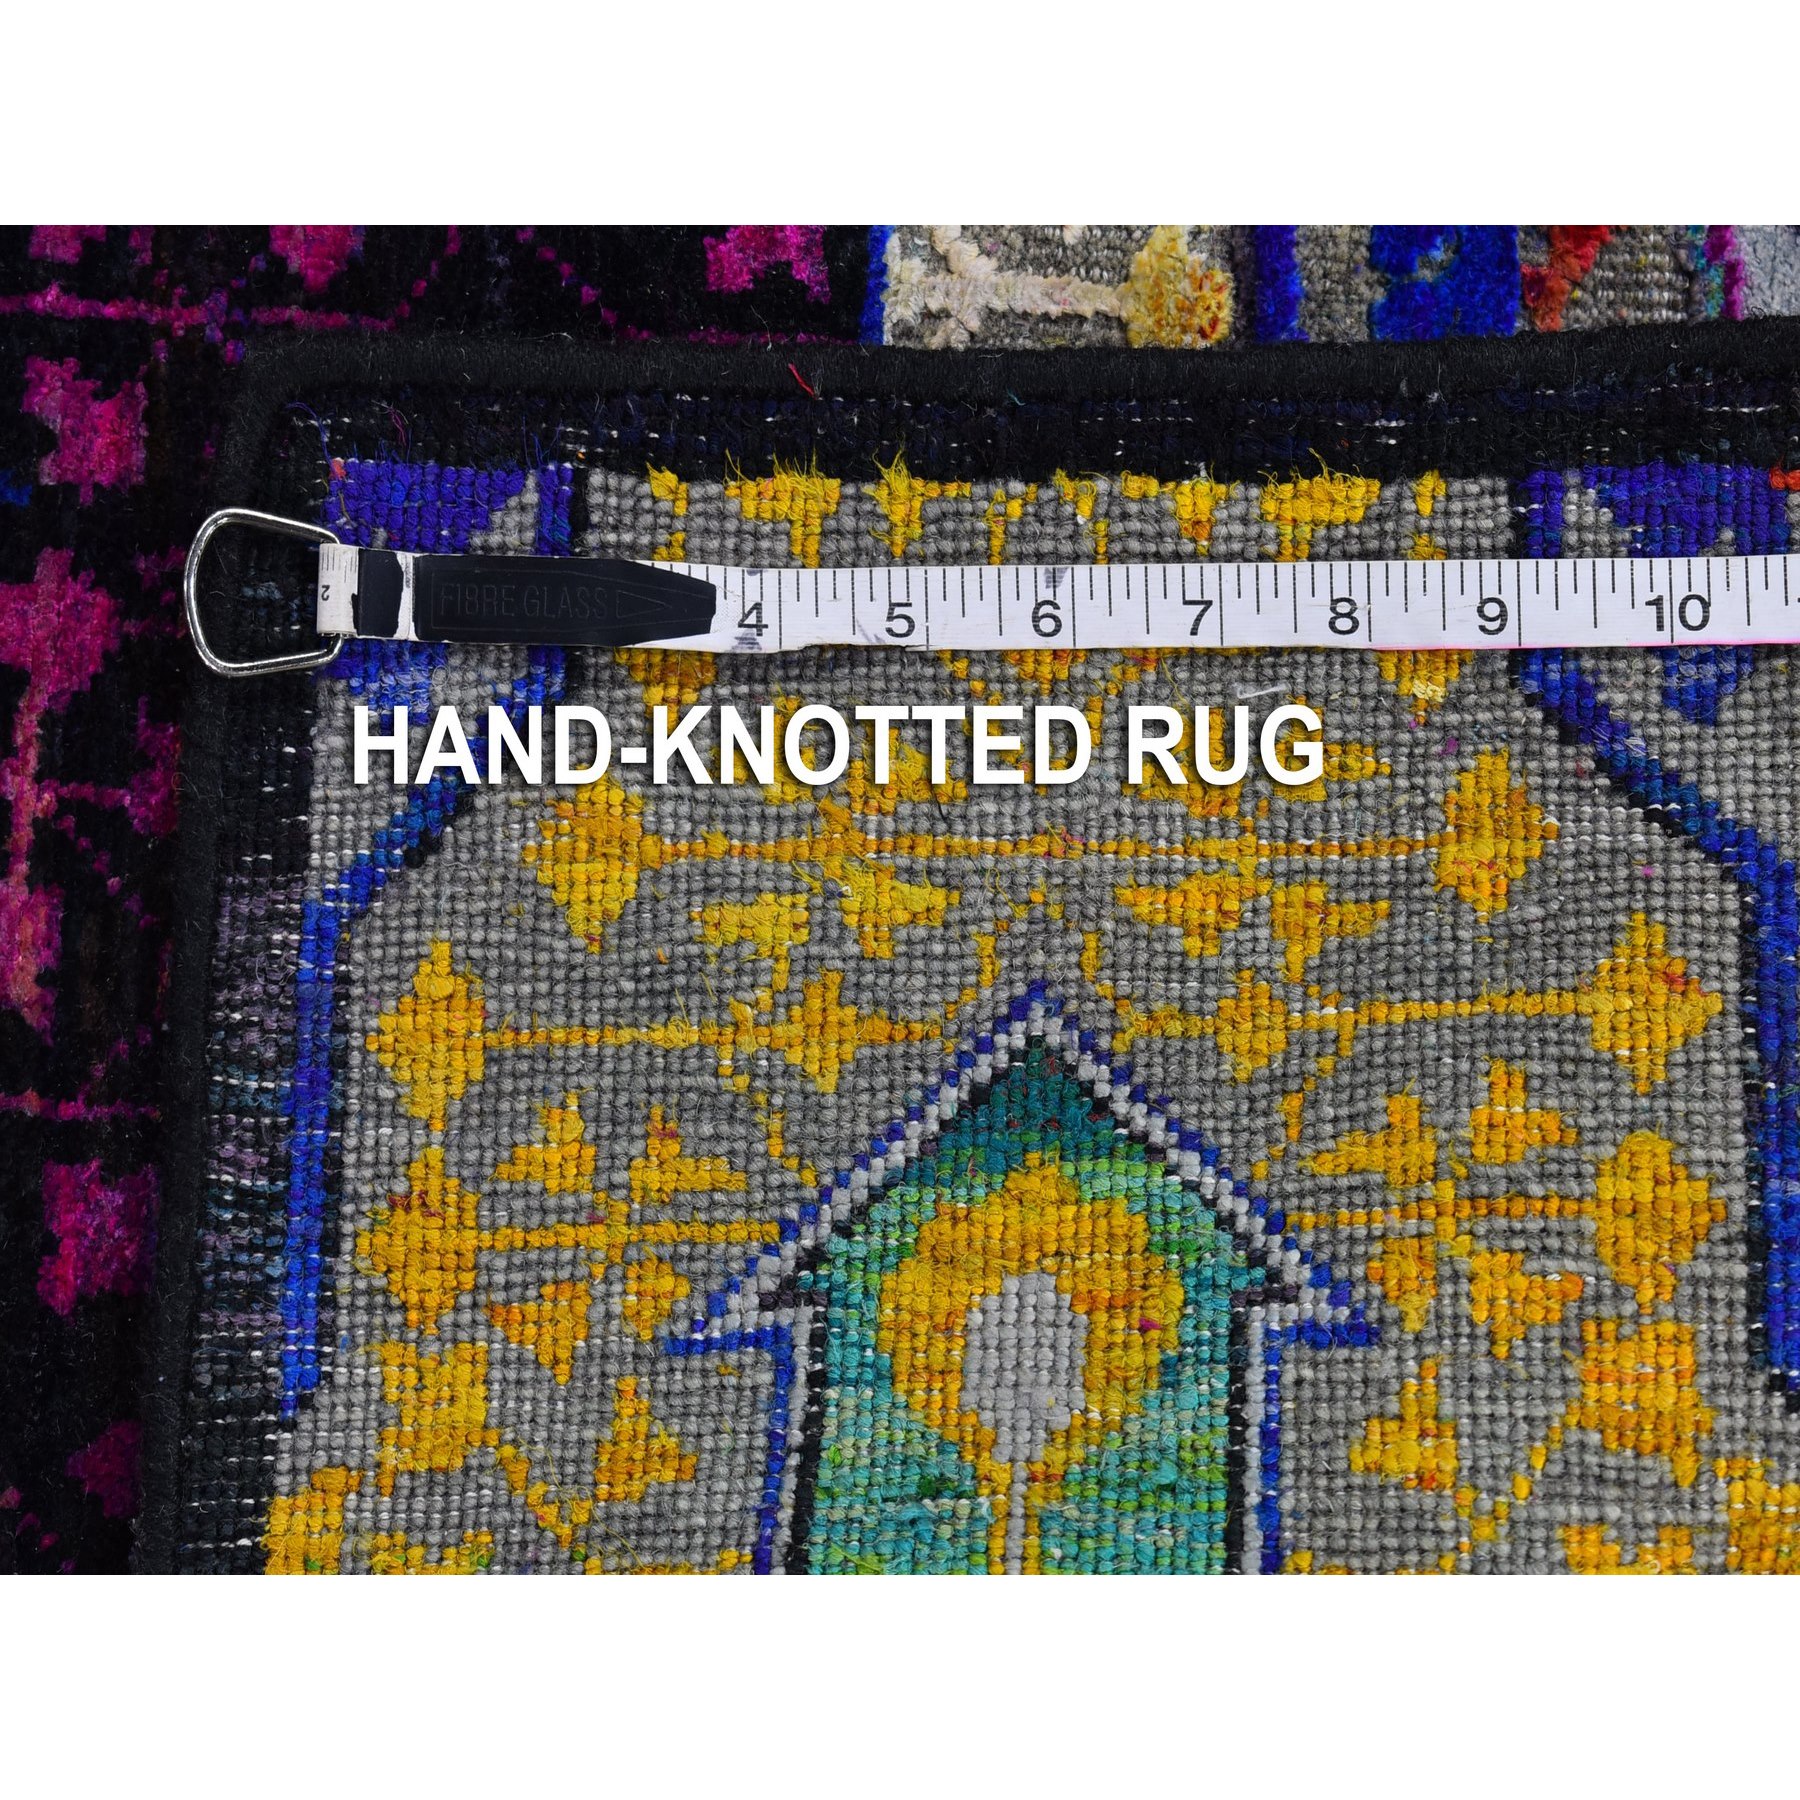 4'1"x12'3" Sari Silk with Textured Wool Mamluk Design Colorful Hand Woven Runner Oriental Rug 